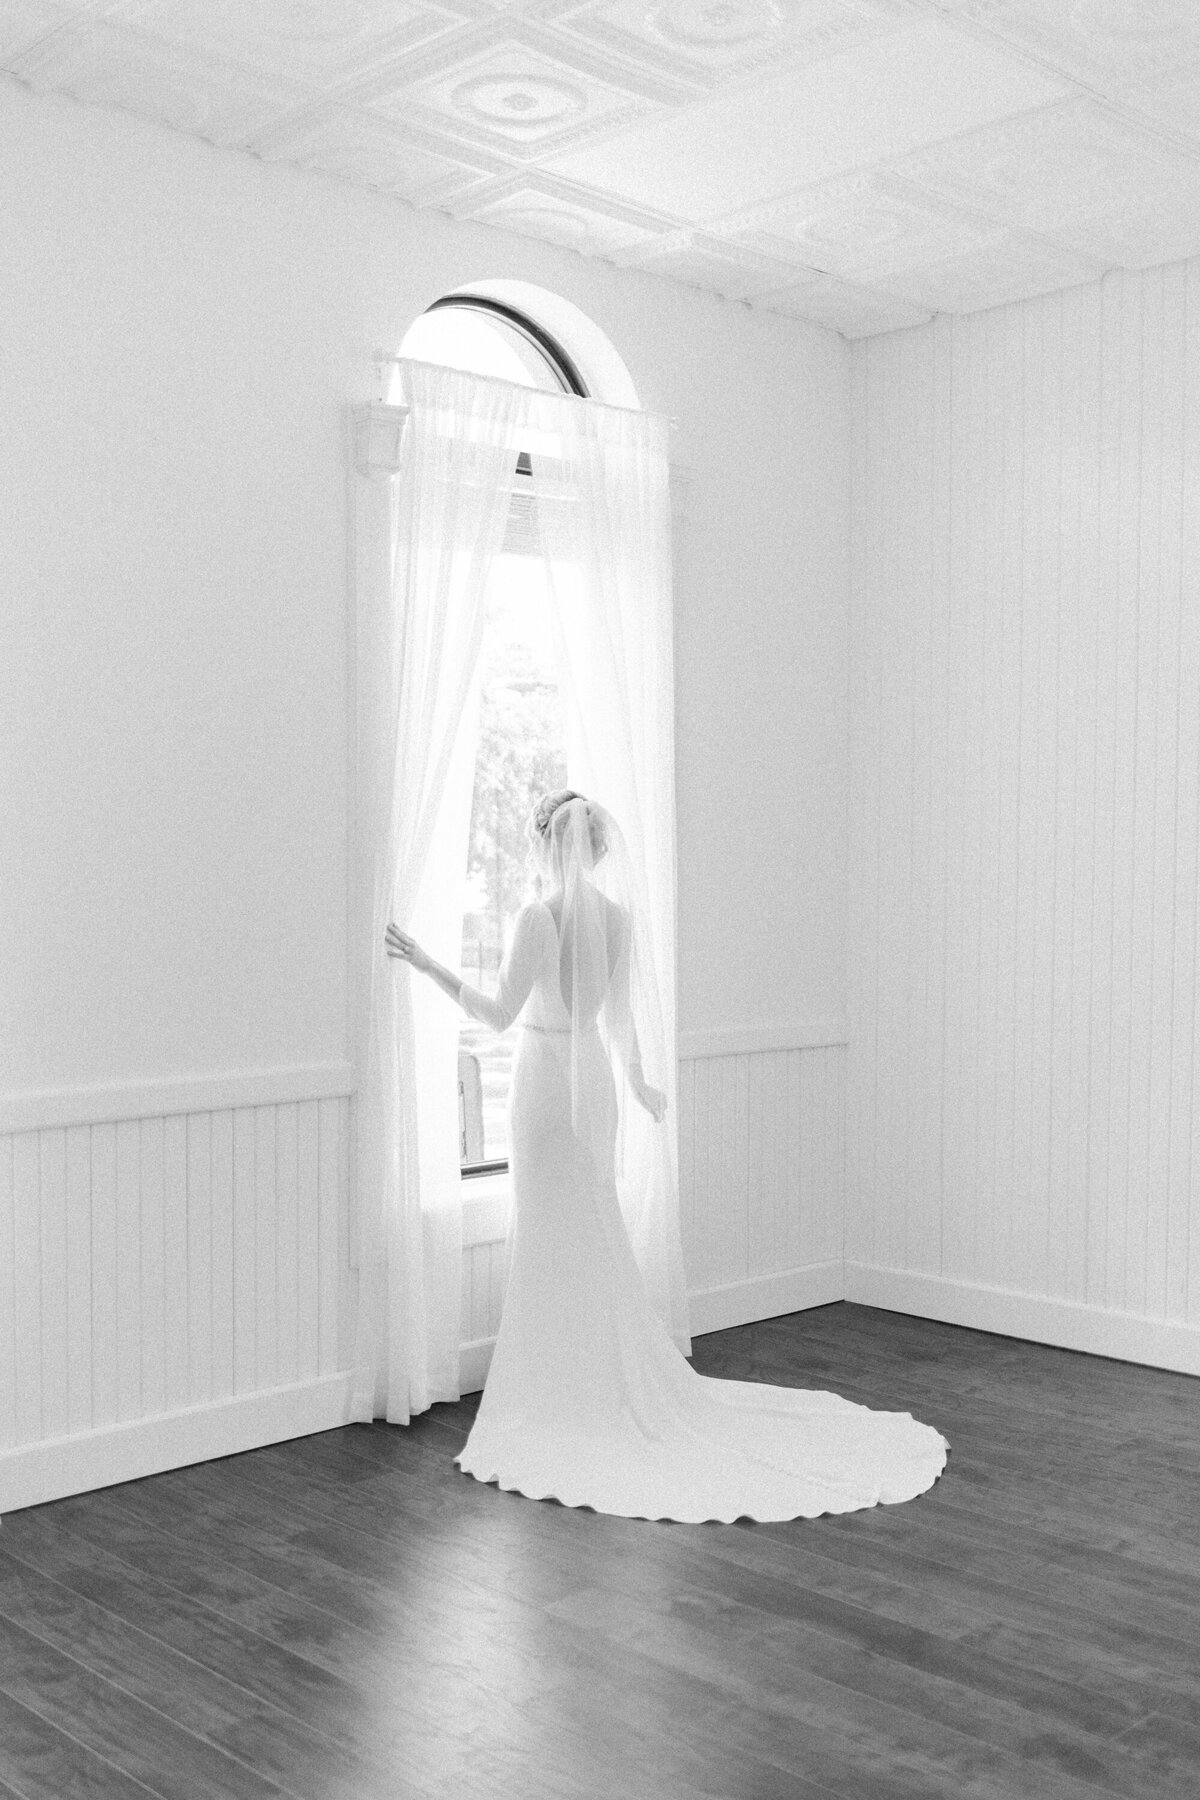 Portfolio | Bridal Portraits Session | Wedding Photography by Ink & Willow Associates | Victoria TX